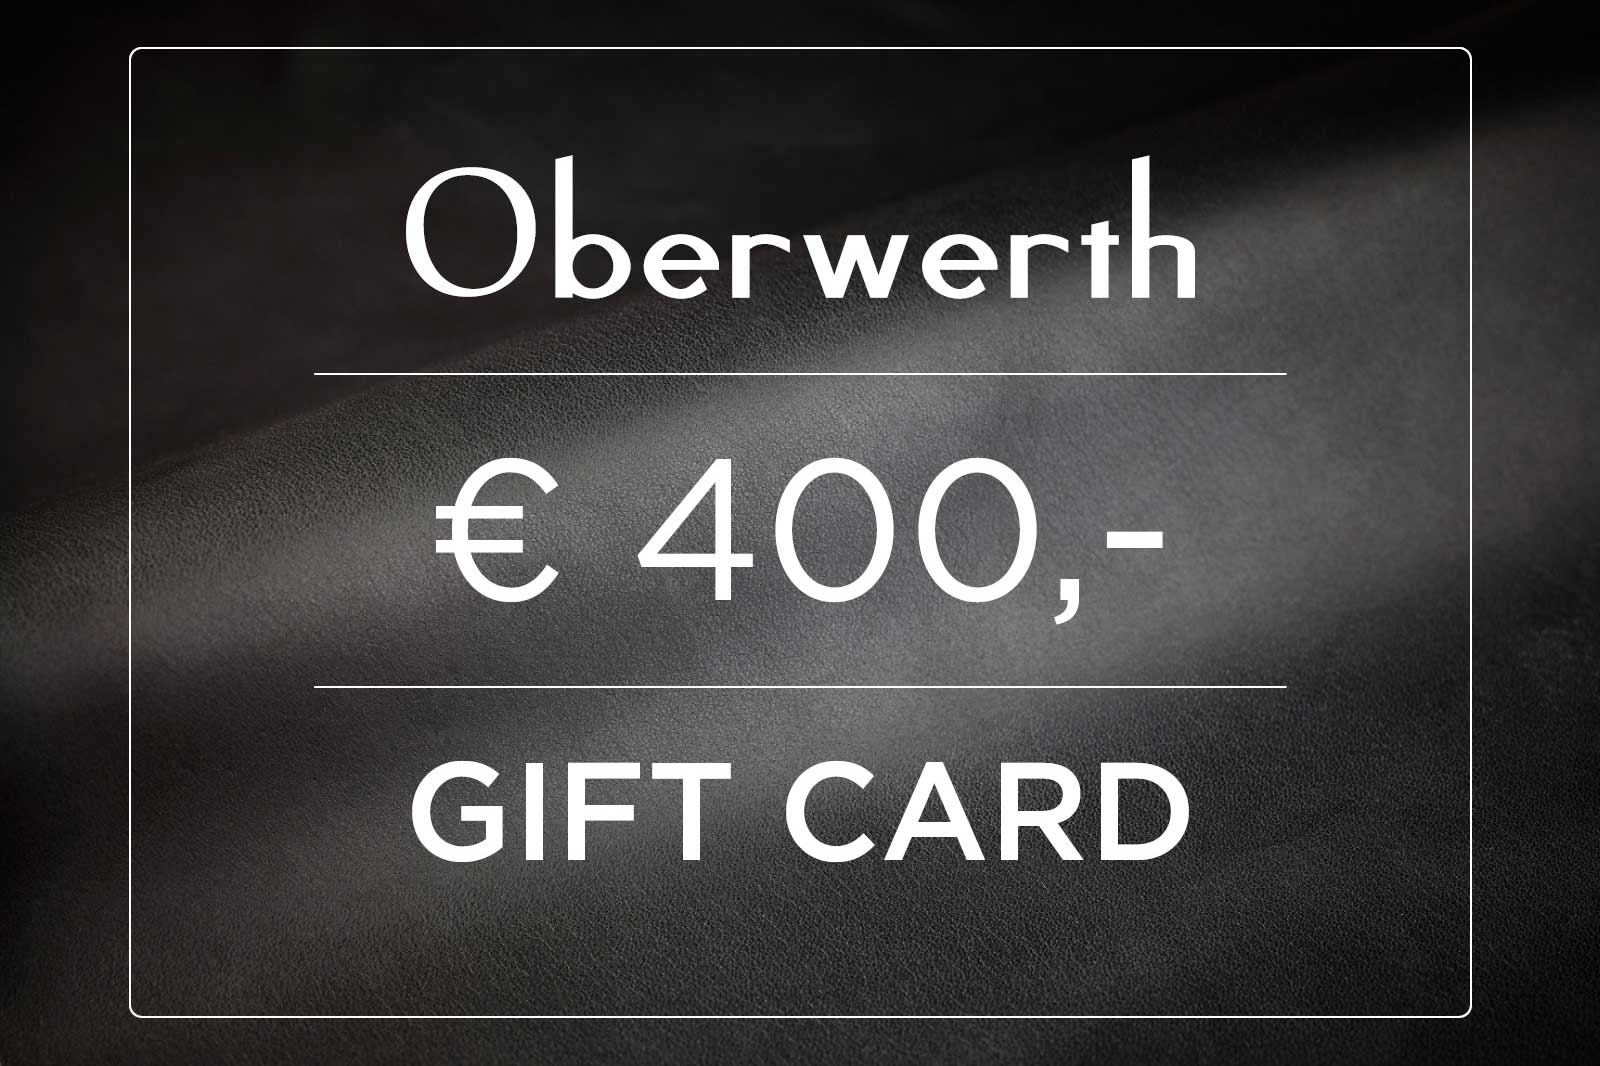 Oberwerth gift card 50€ - 2000€